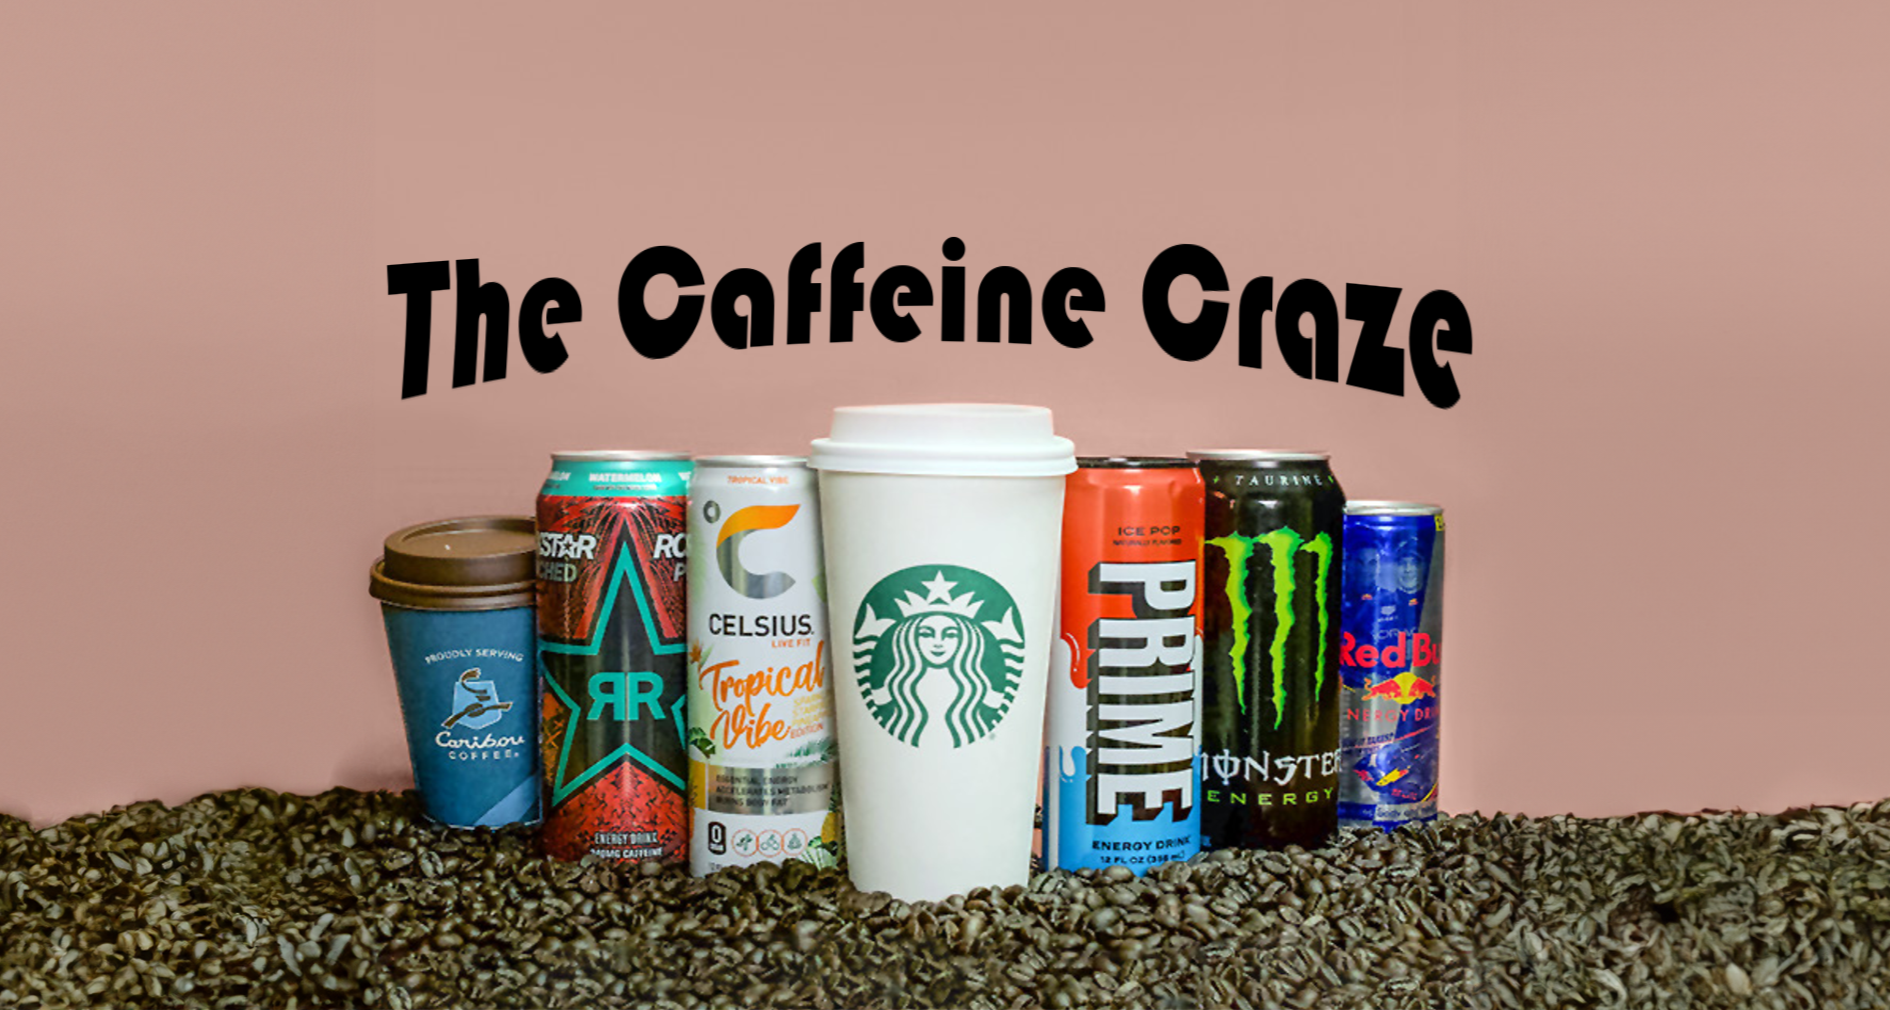 The caffeine craze